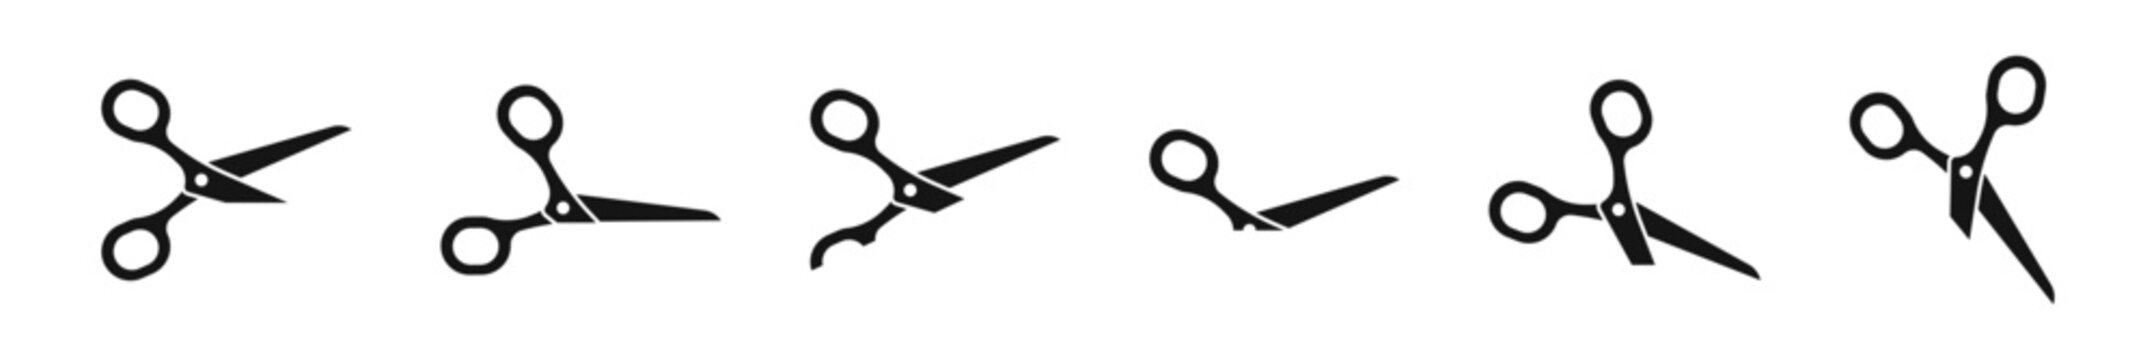 Scissors vector icons. Cutting scissors silhouettes. Vector icon set.